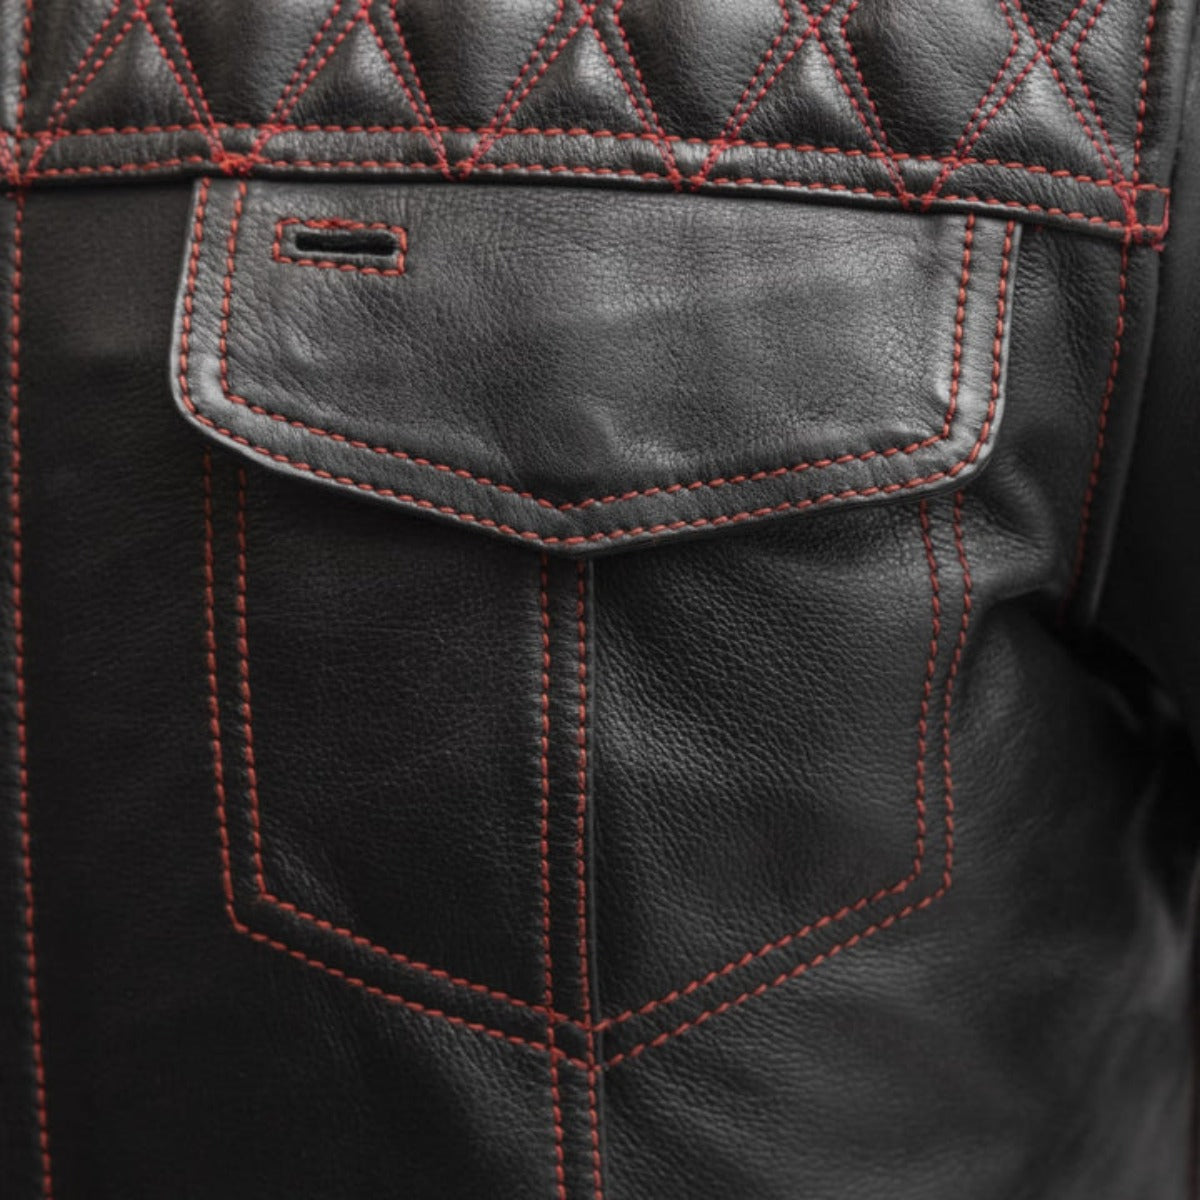 First Manufacturing Cinder - Men's Cafe Style Leather Jacket, Black/Red